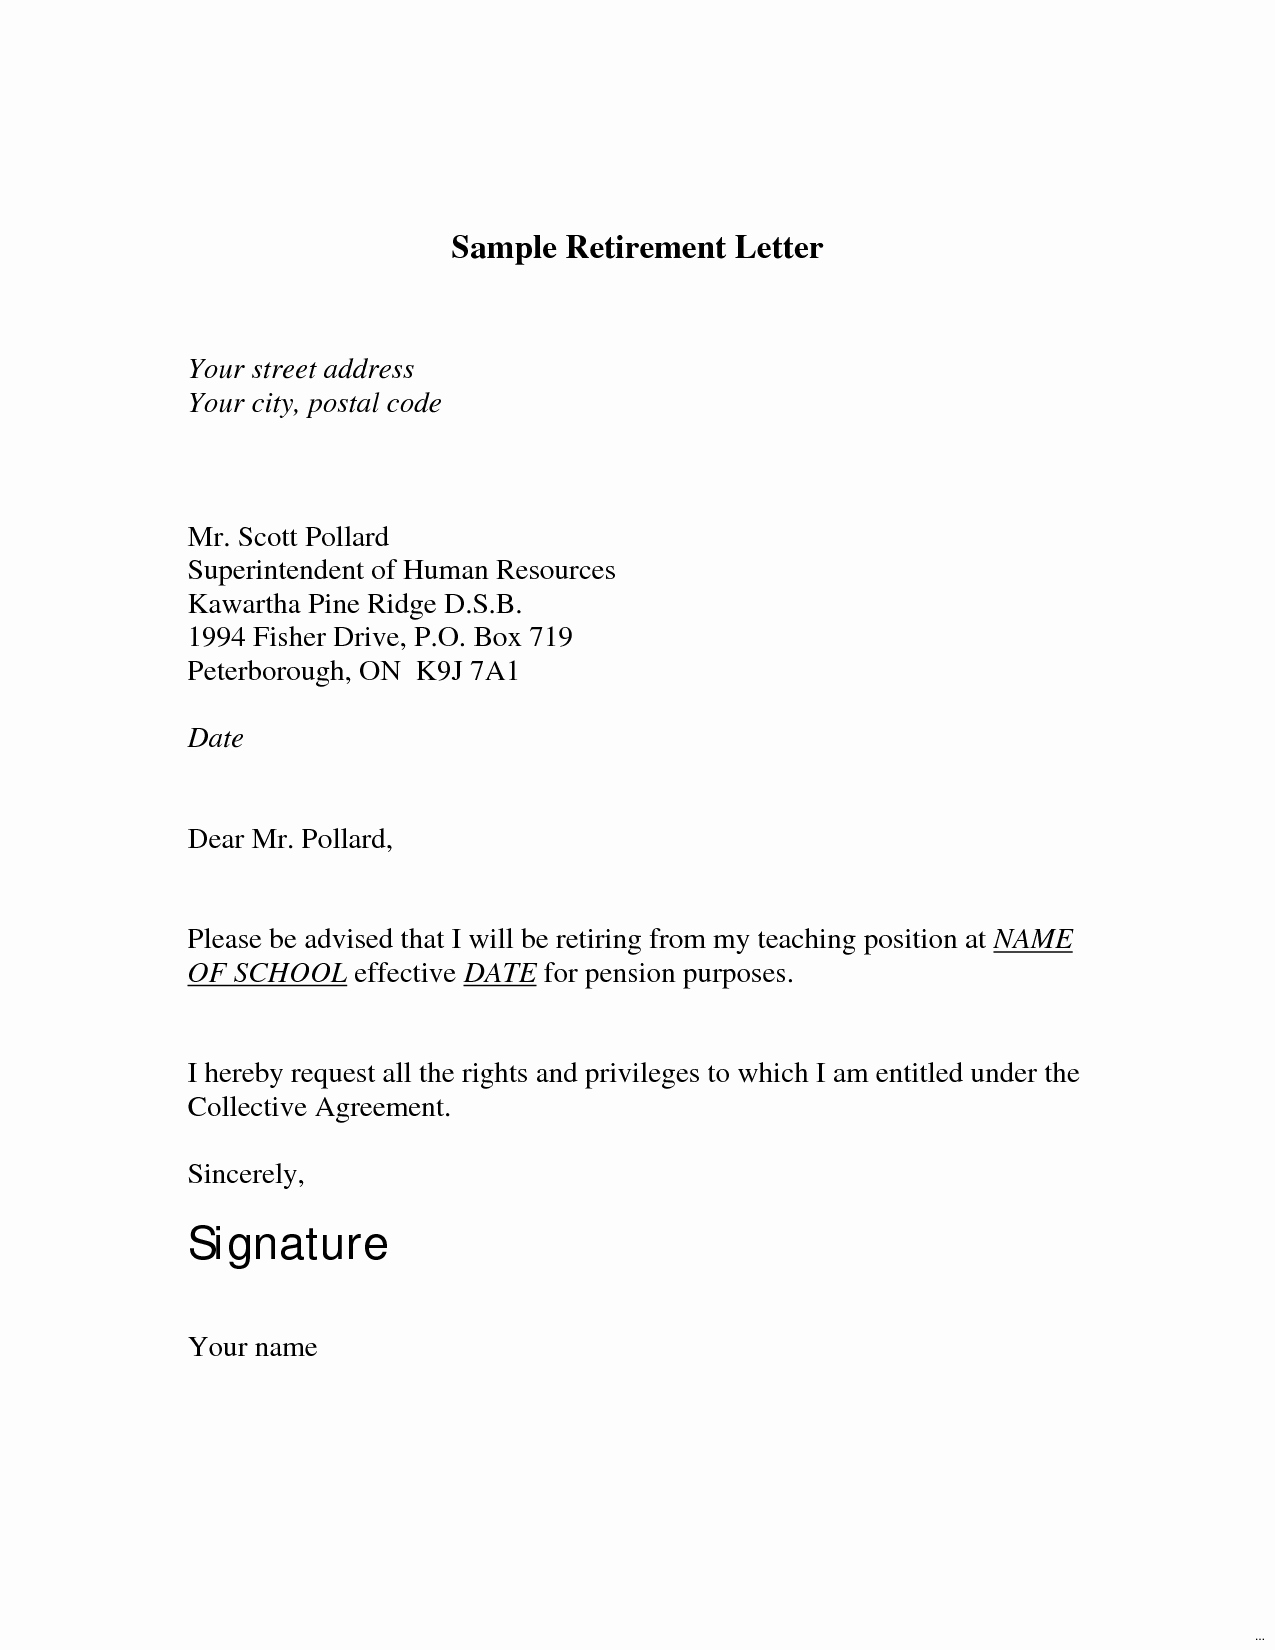 Sample Retirement Letter Employer to Employee